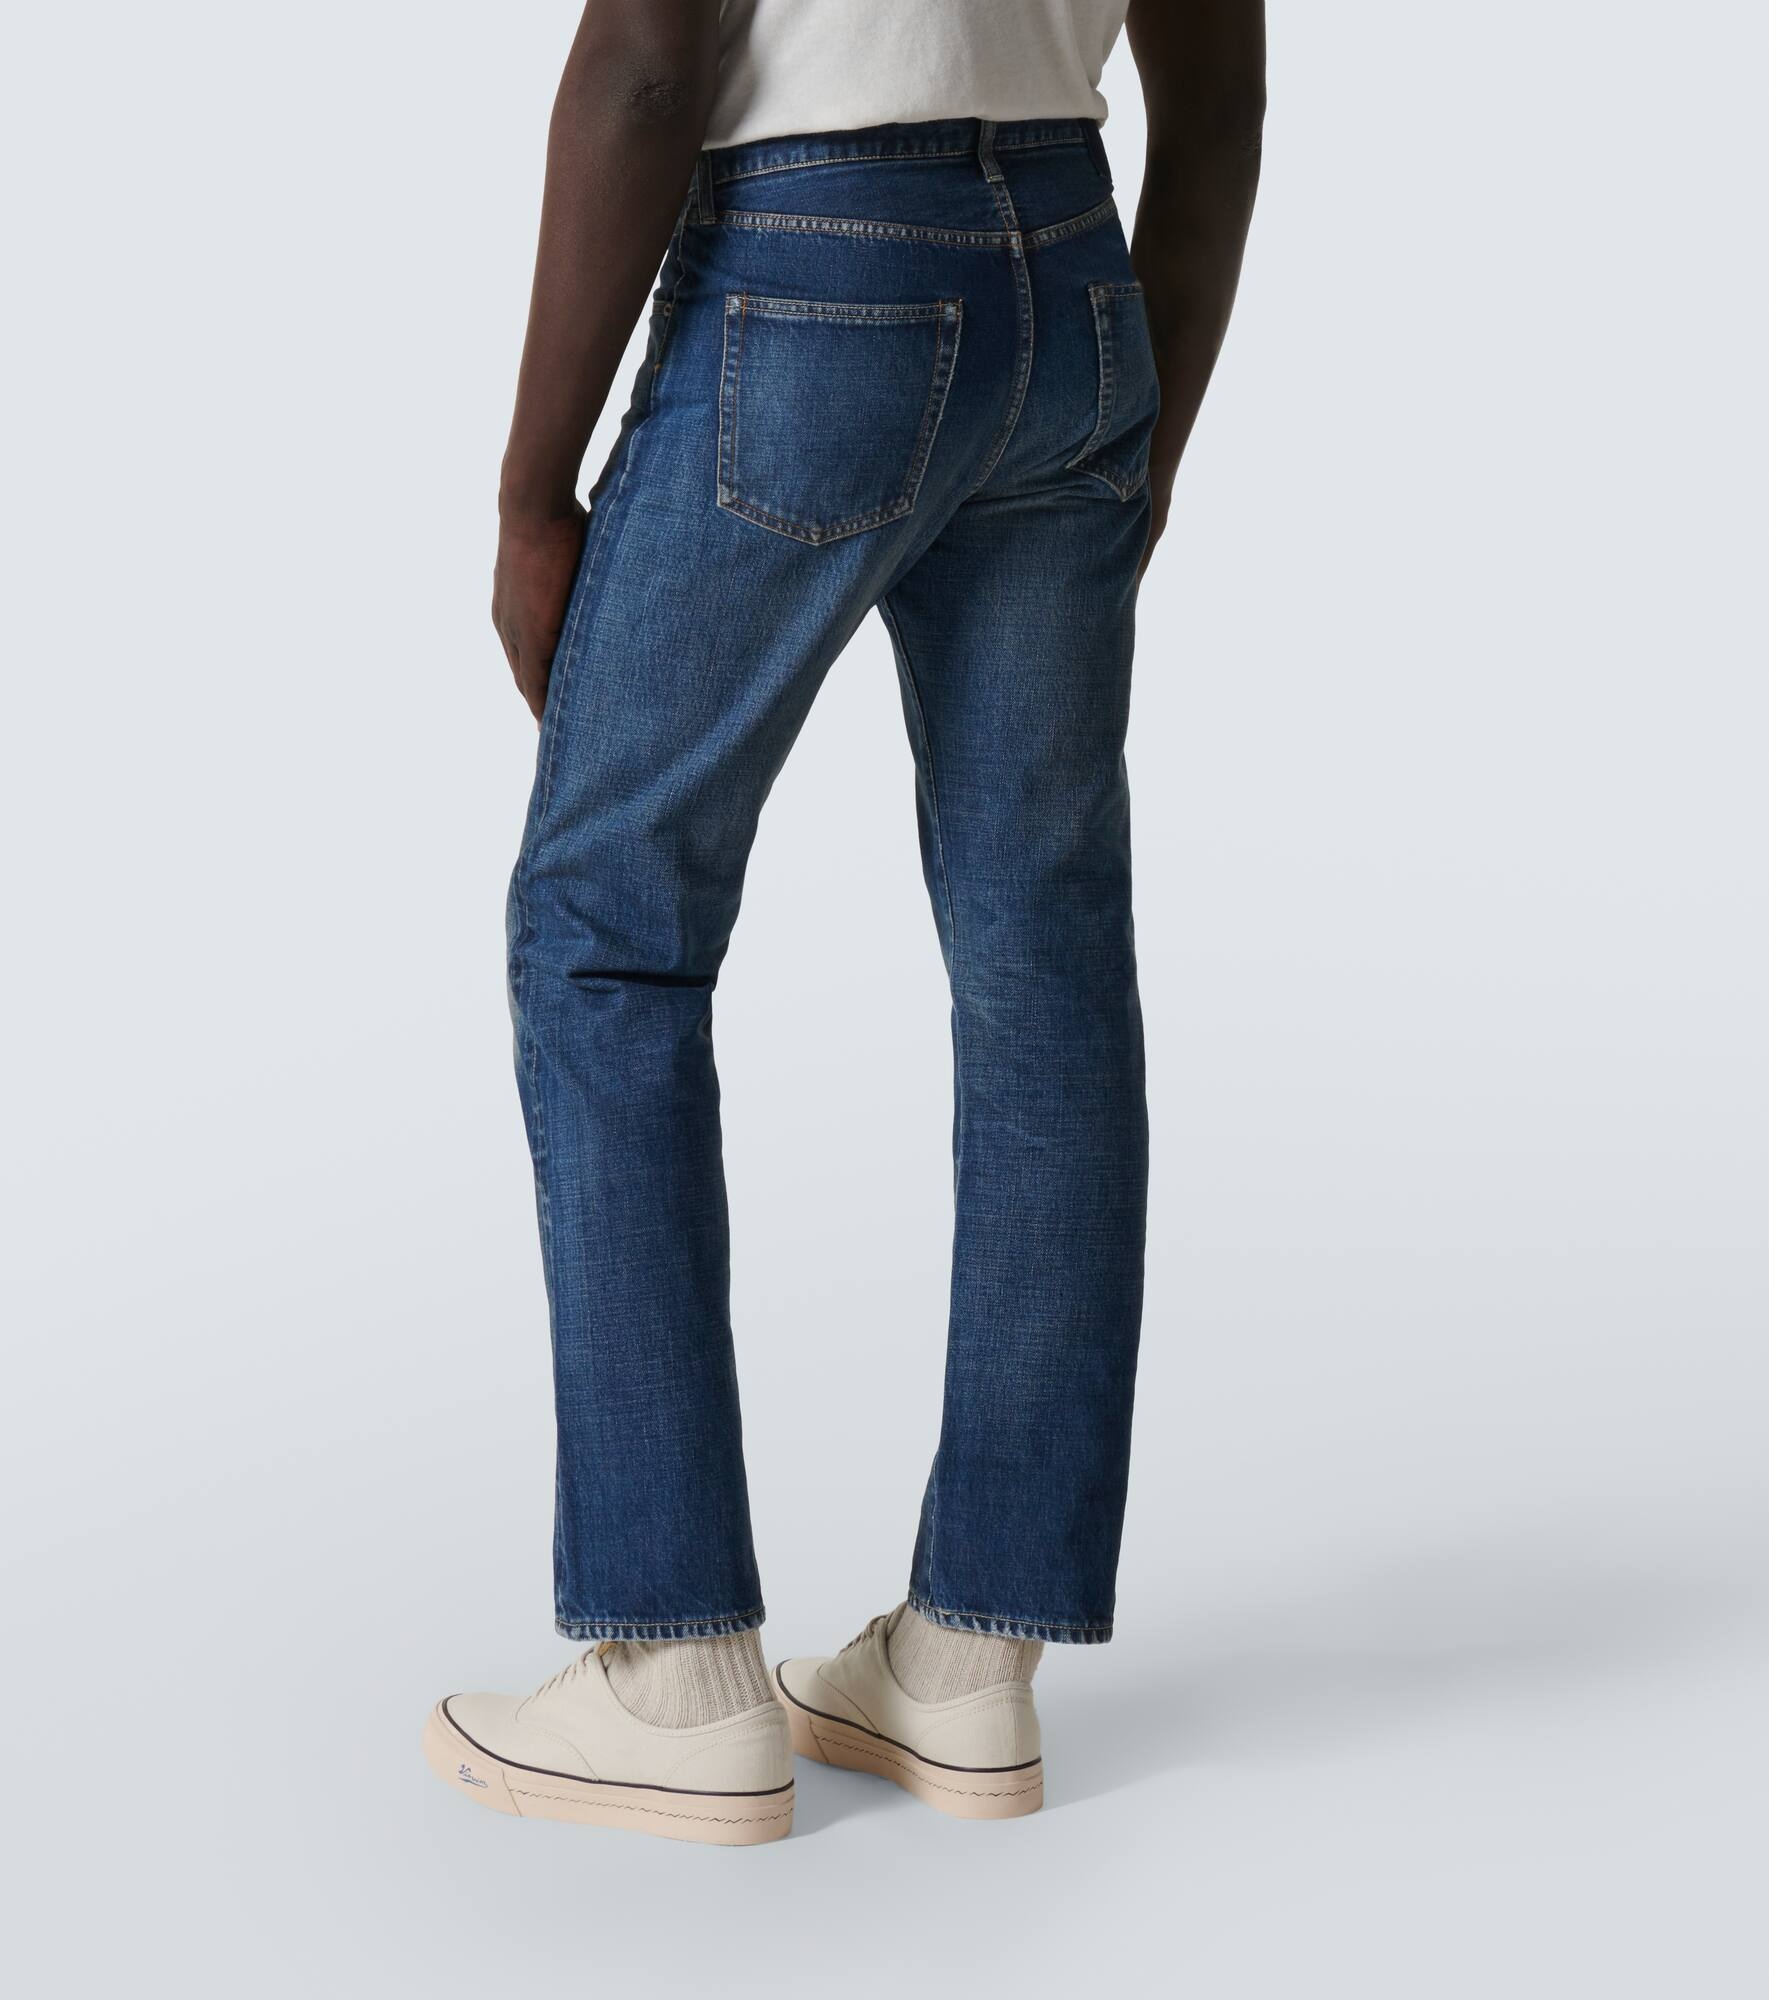 Social Sculpture 00 straight jeans - 4